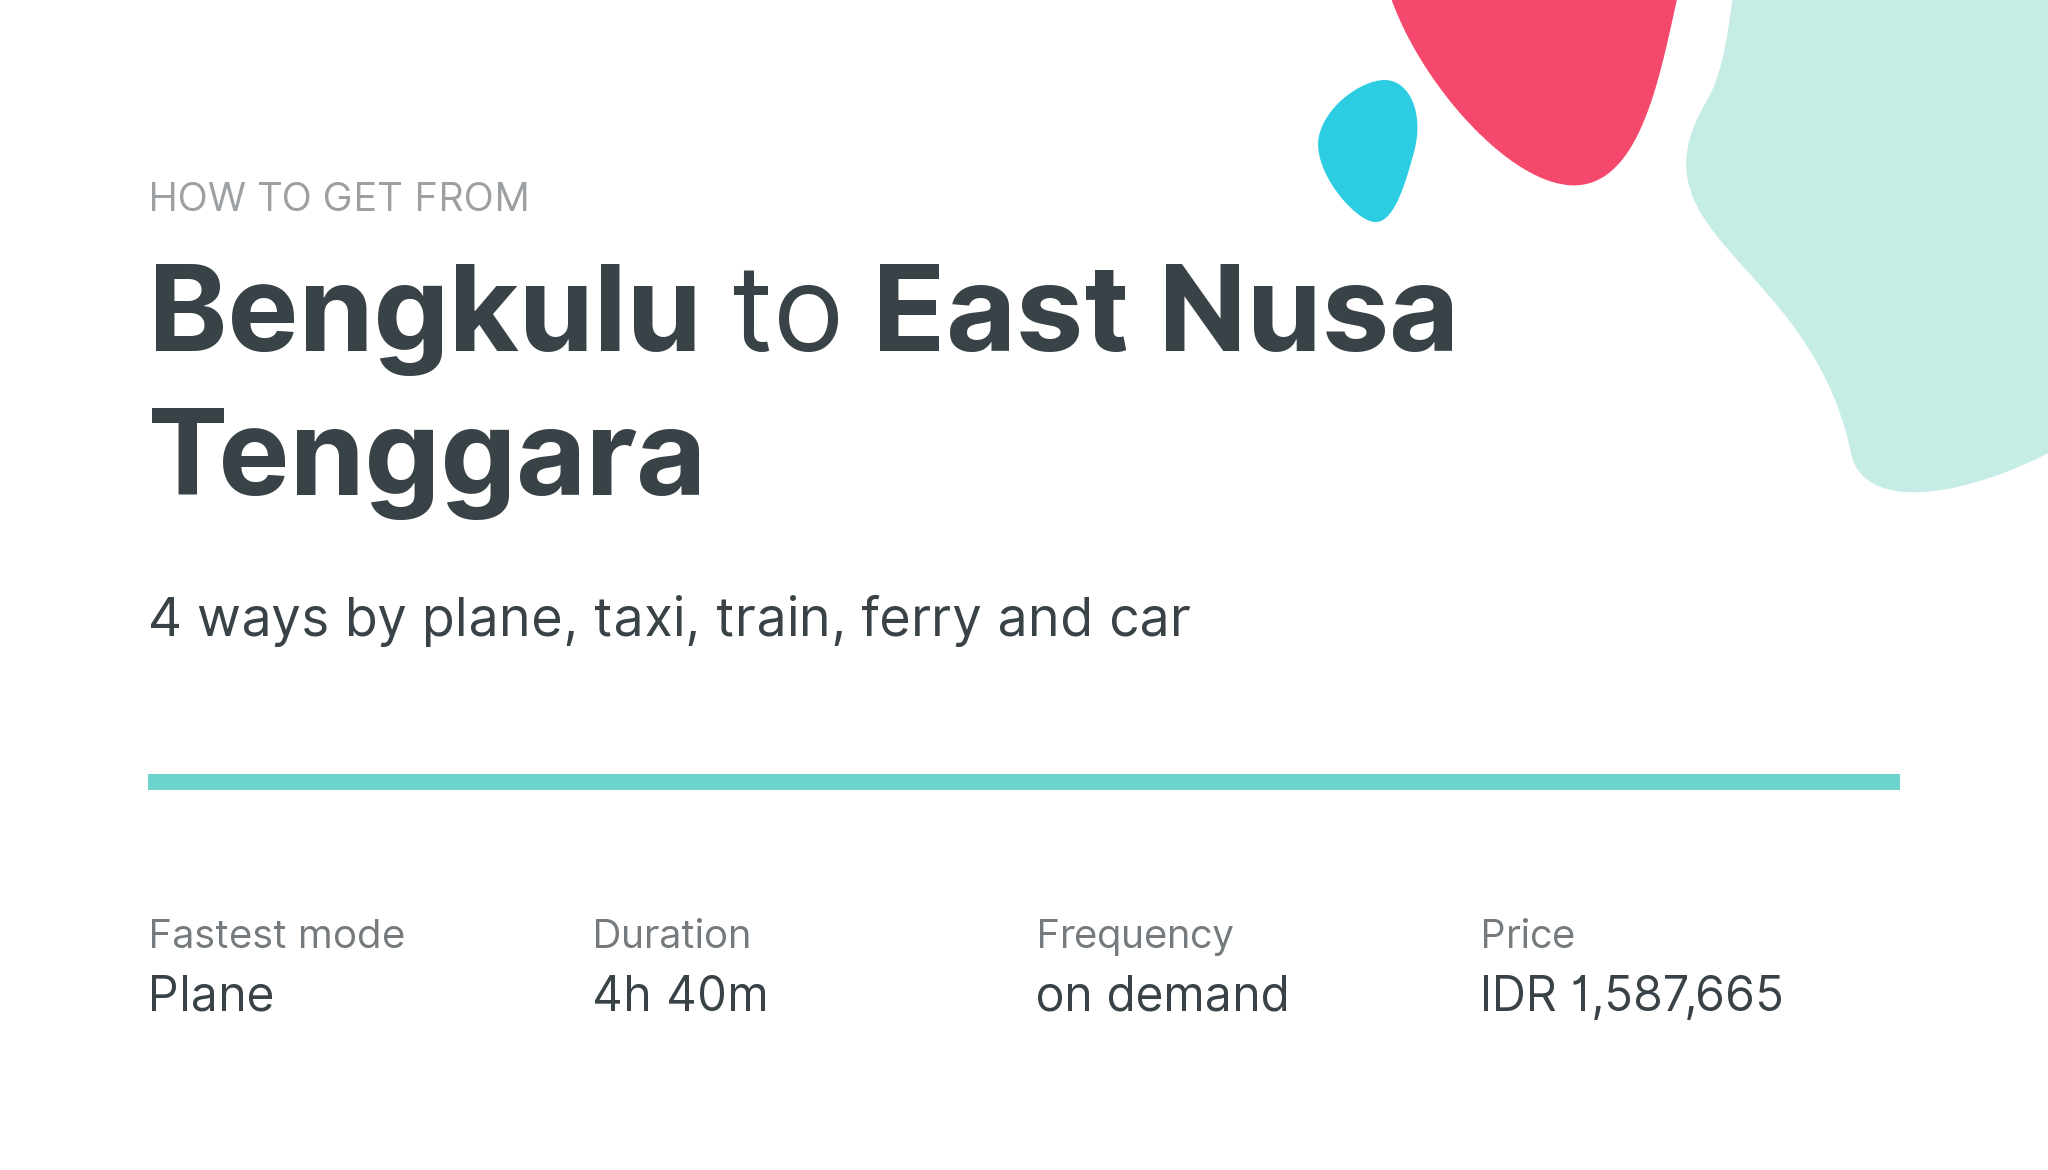 How do I get from Bengkulu to East Nusa Tenggara